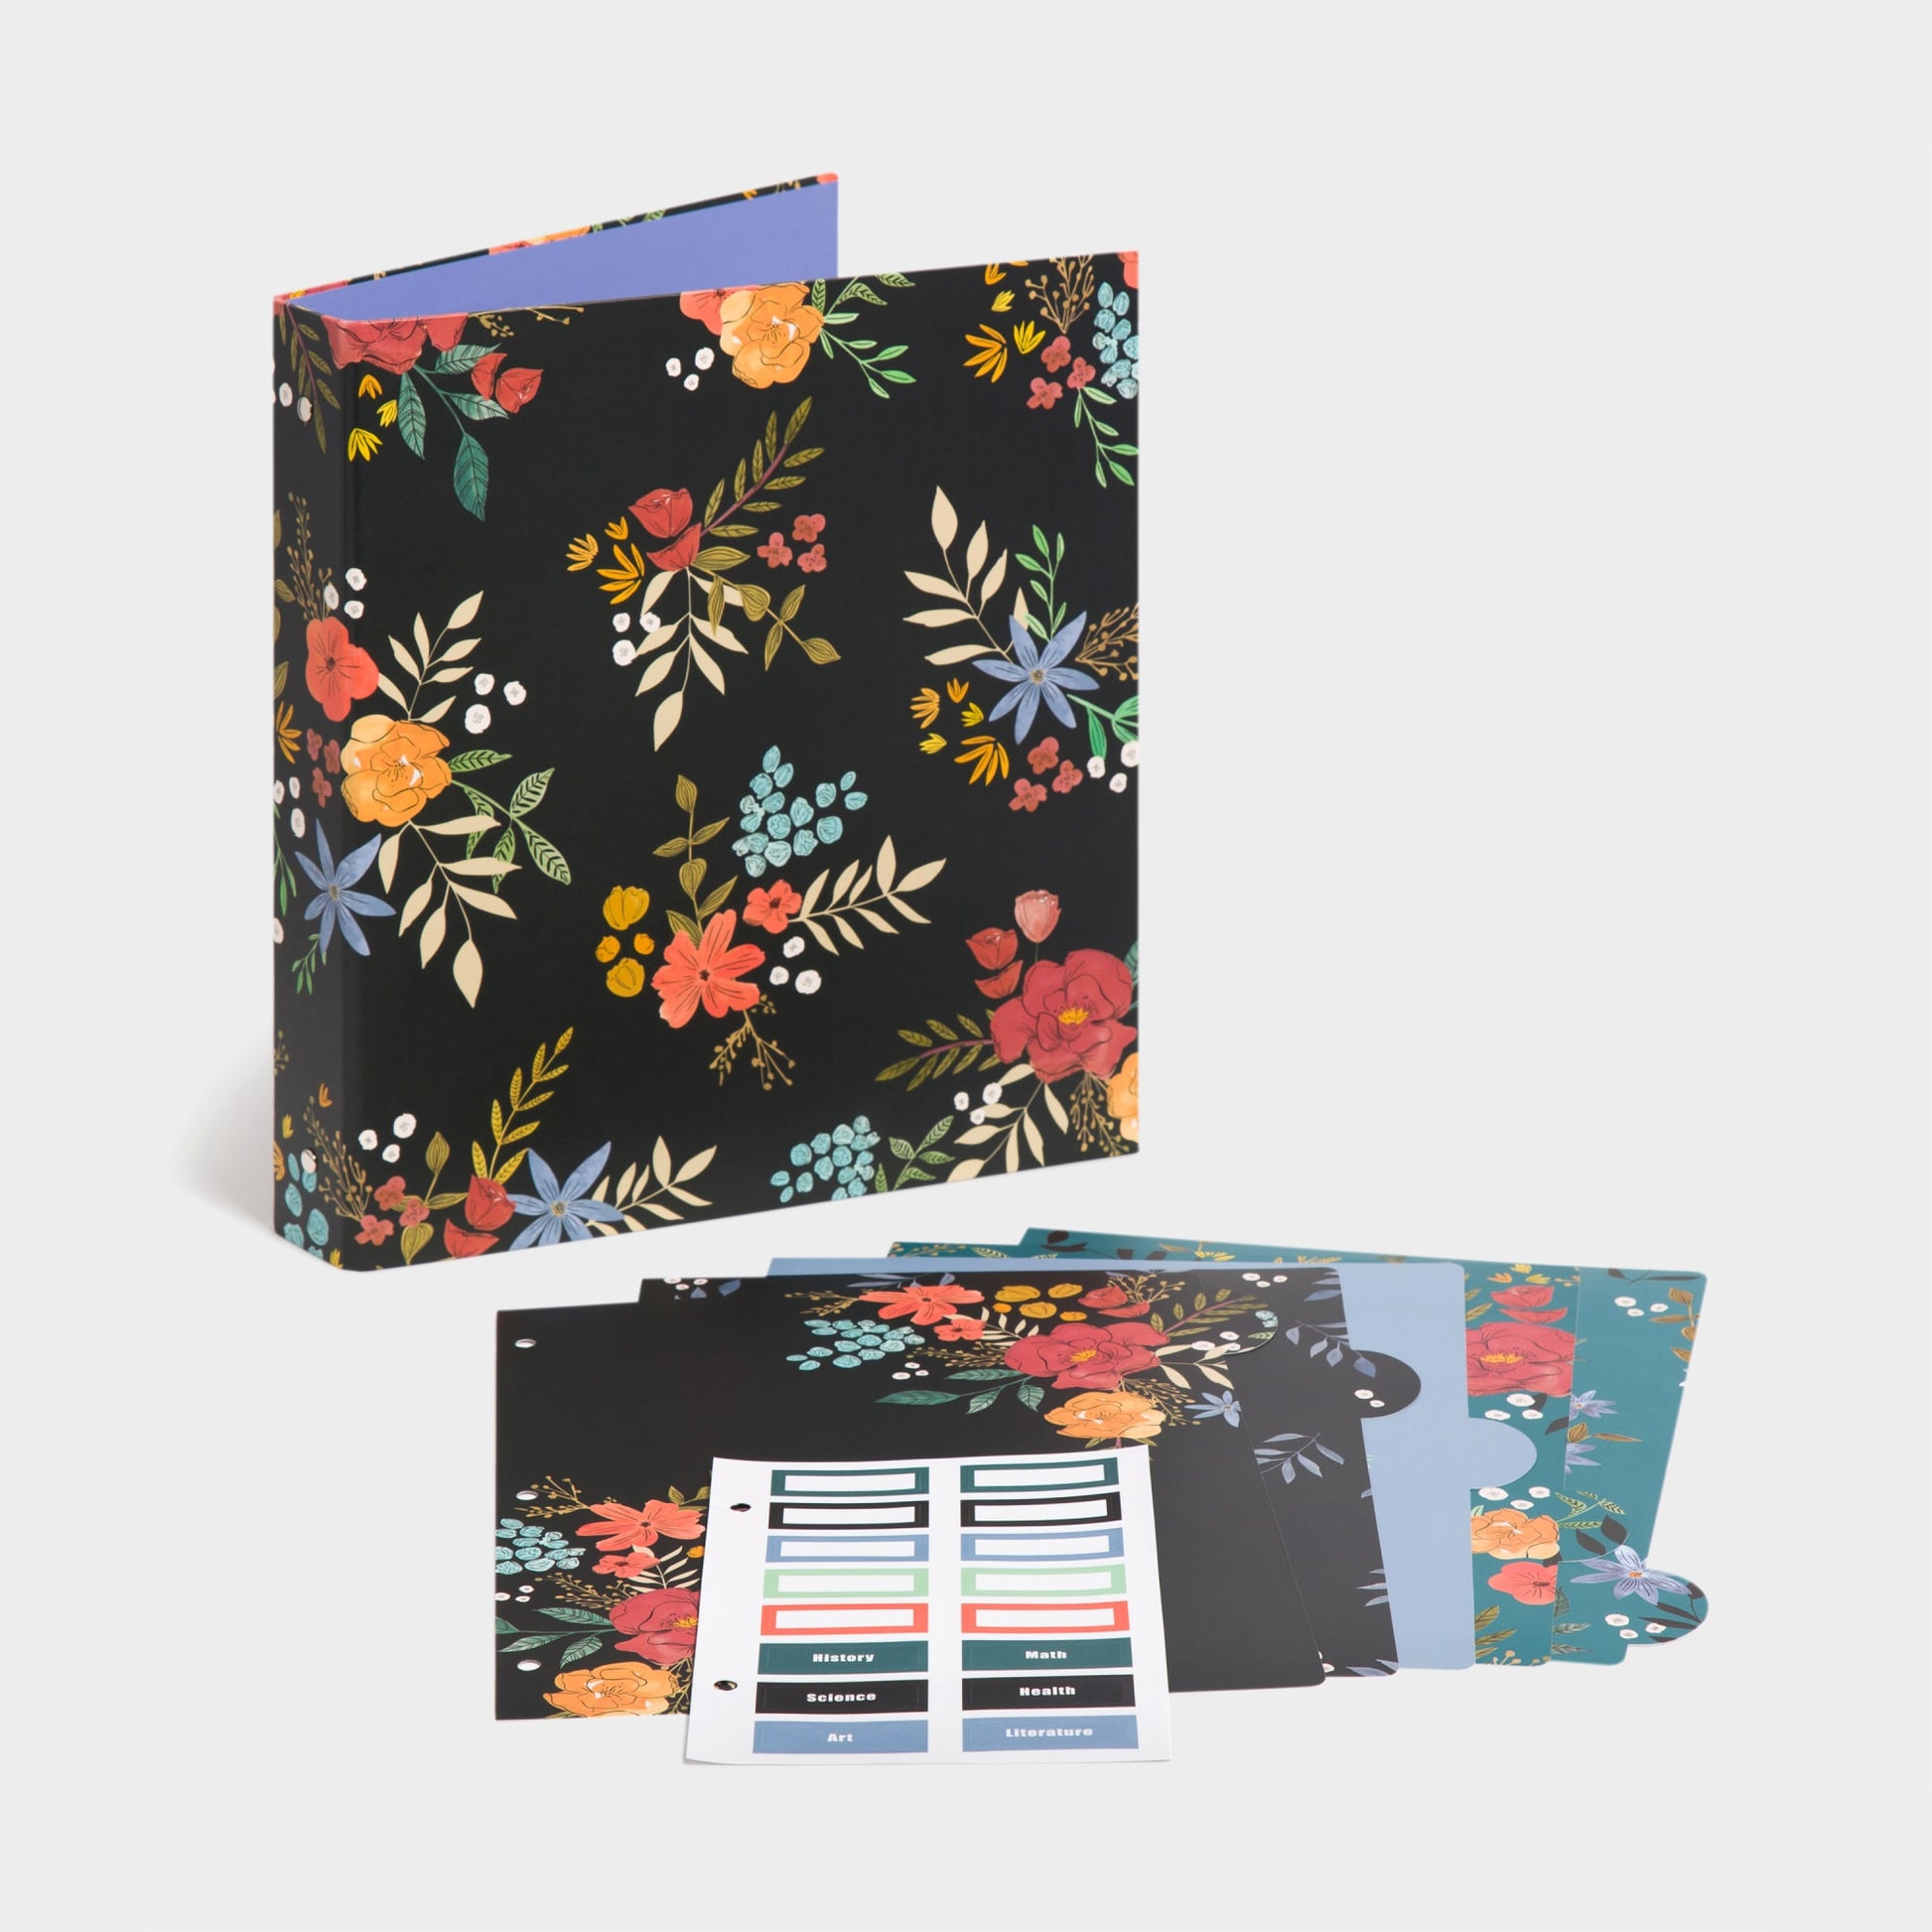 Midnight Blossoms, 1" Binder X 5 Tab Divider Set, Assorted Colors, 12.01" X 10.76" X 2.01" 